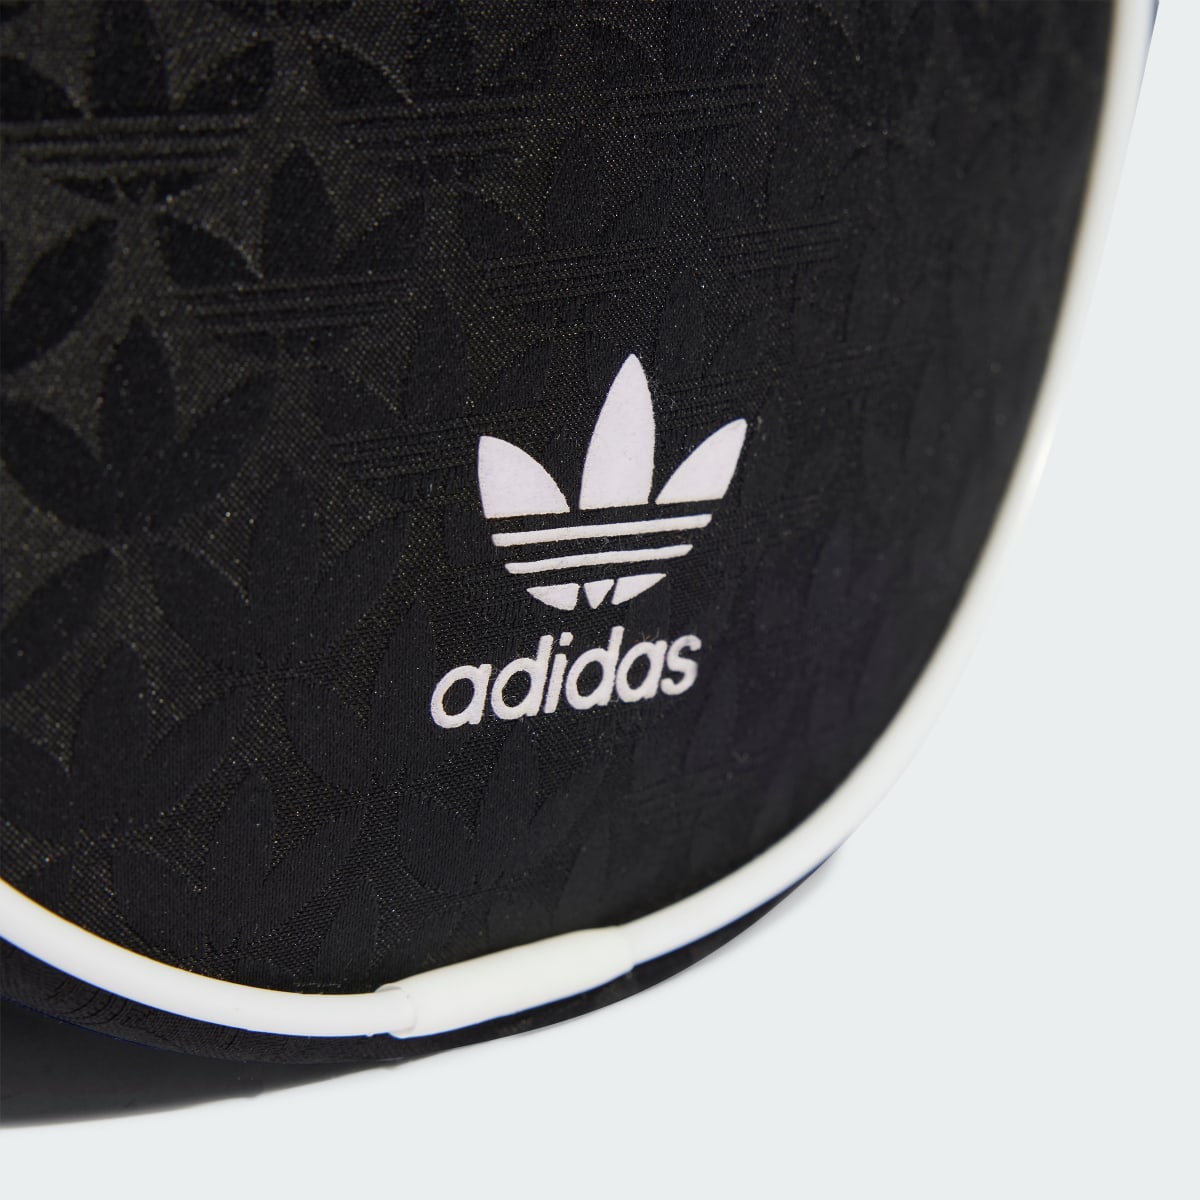 Adidas Trefoil Monogram Jacquard Round Bag. 4